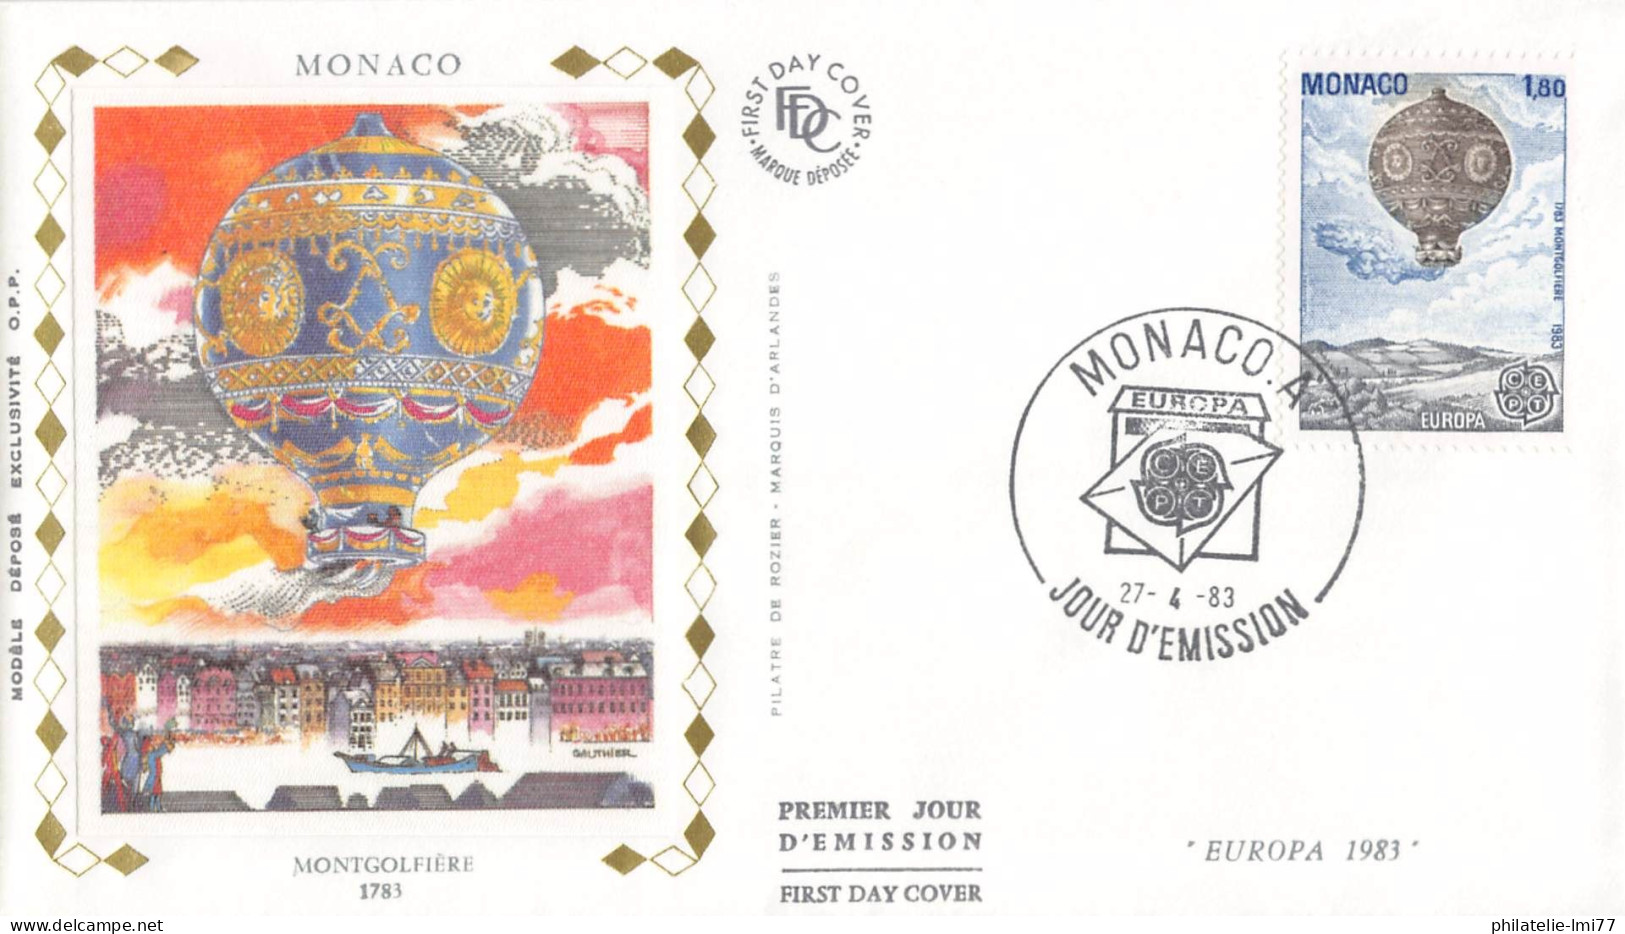 Monaco - FDC Europa 1983 - 1983